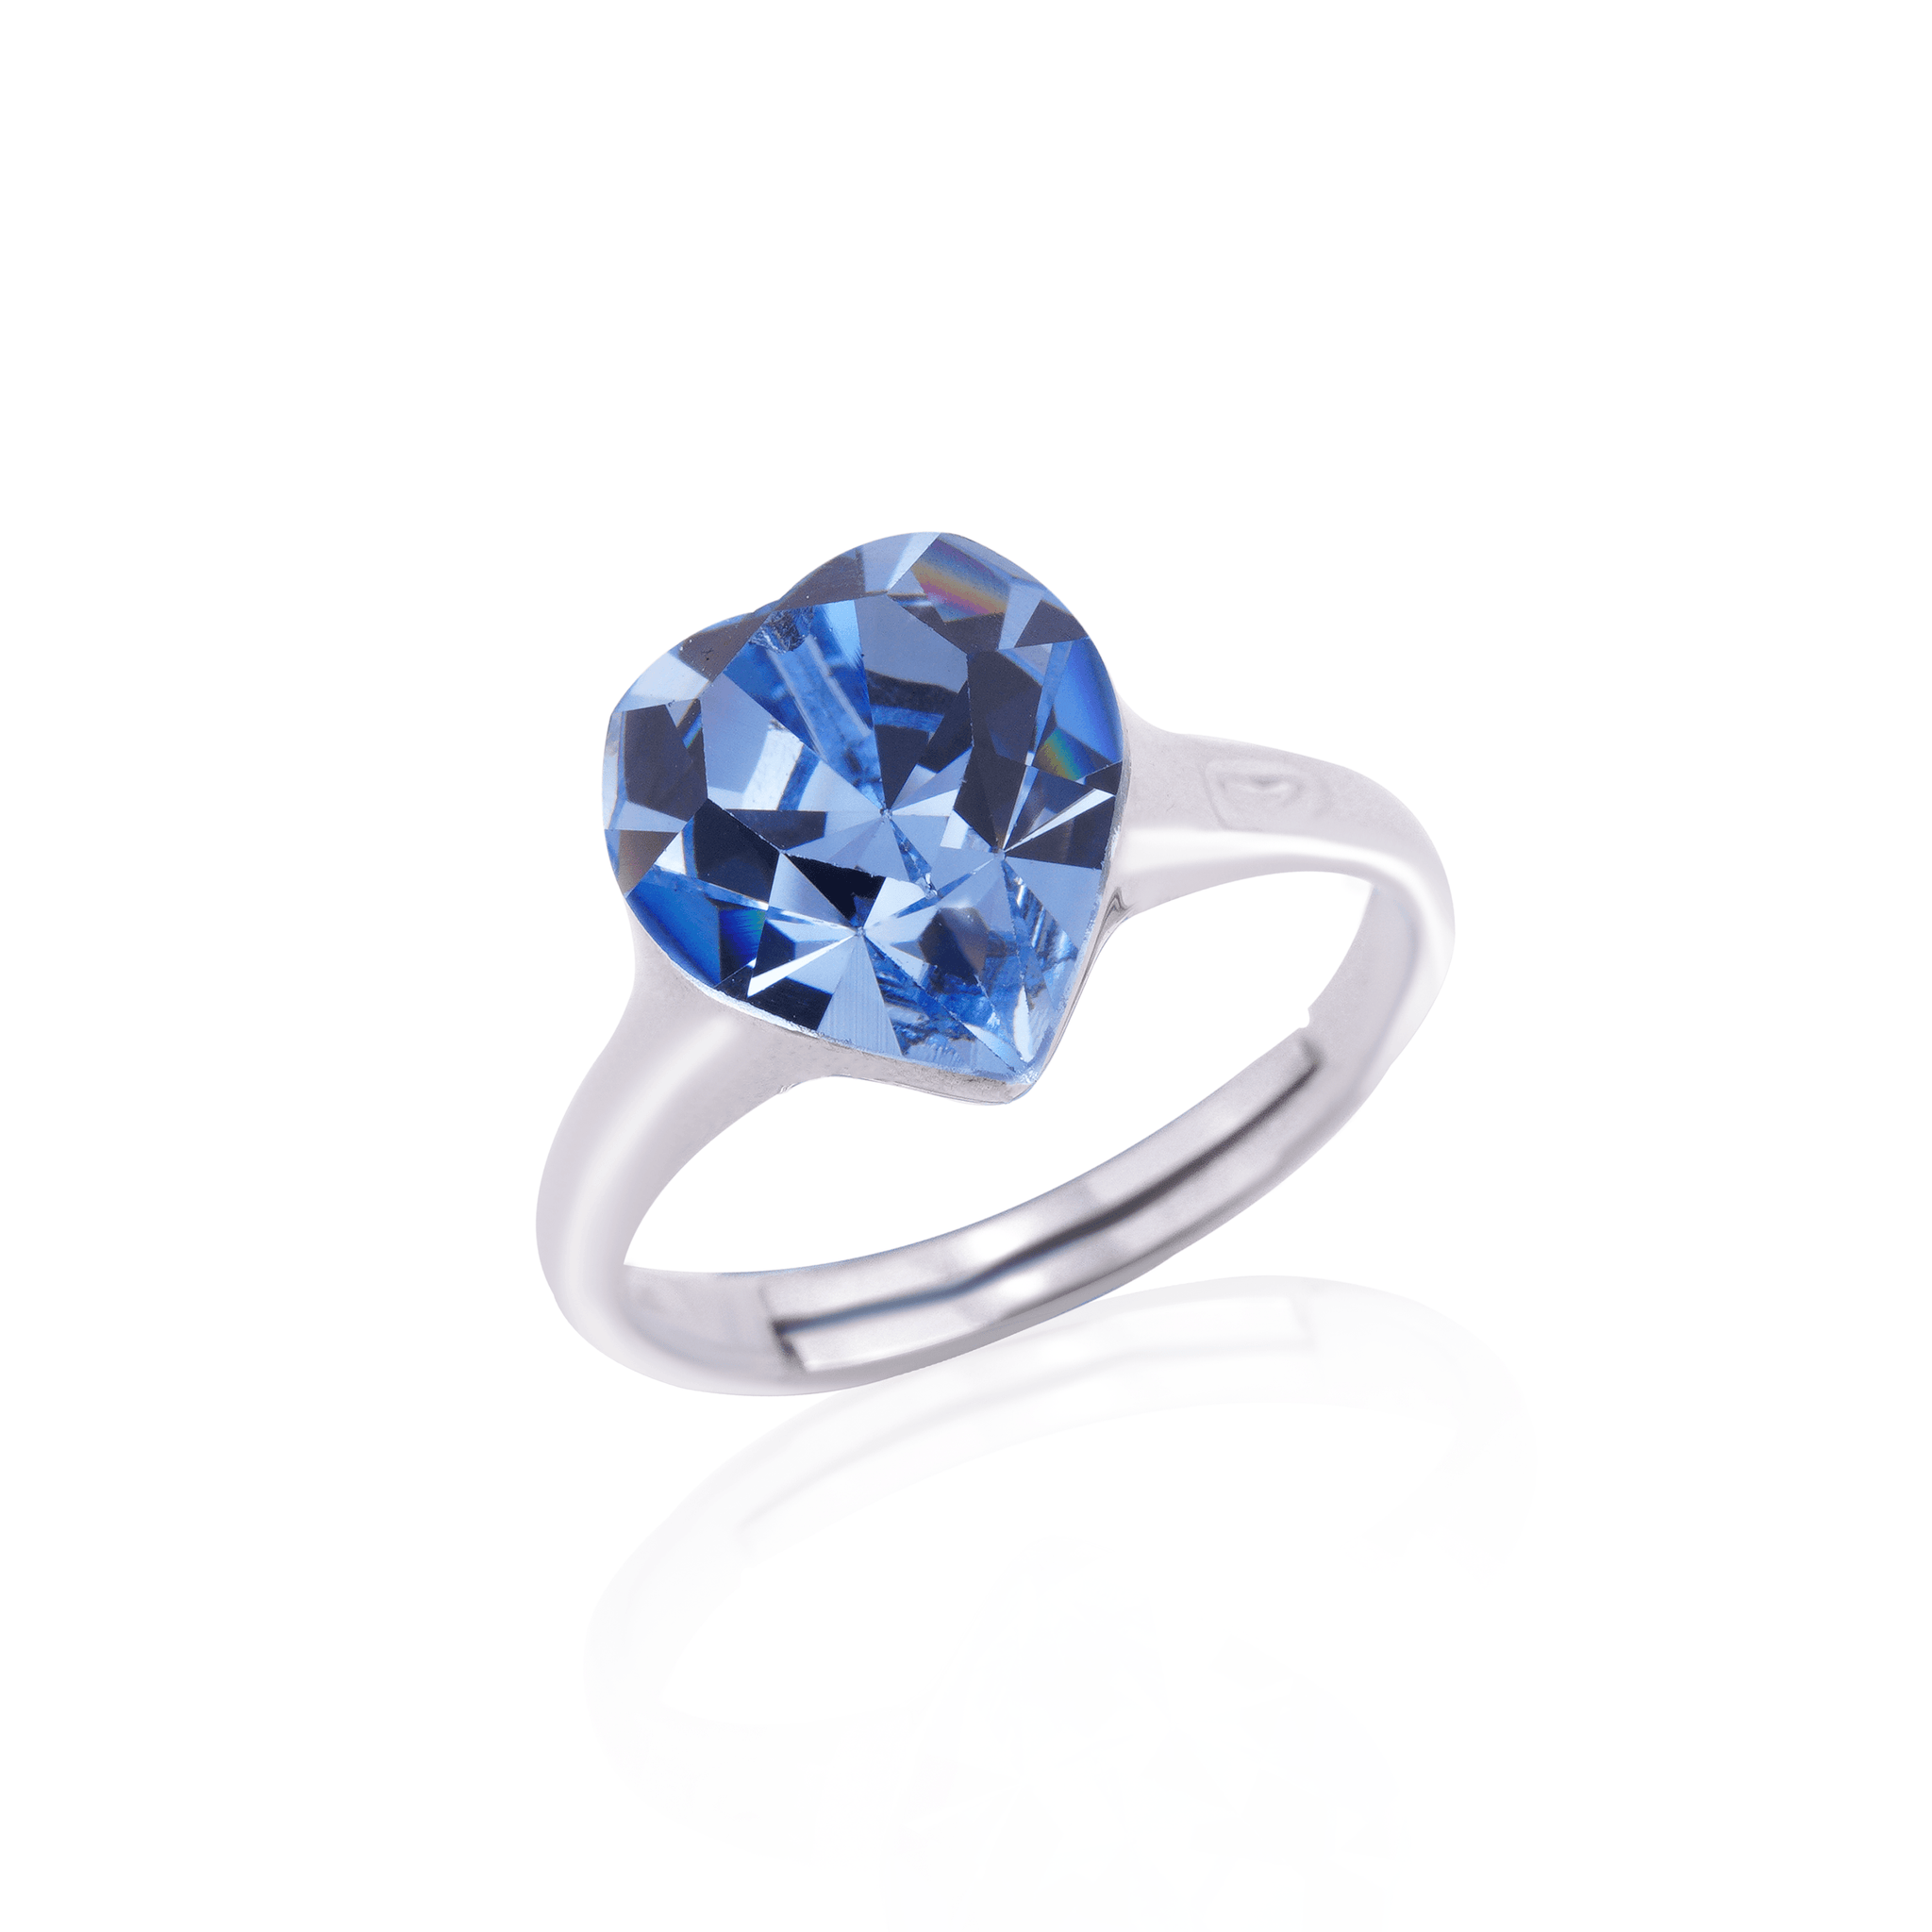 Icy Blue Unique Heart CZ Diamond Adjustable Engagement Ring - YANA SILVER